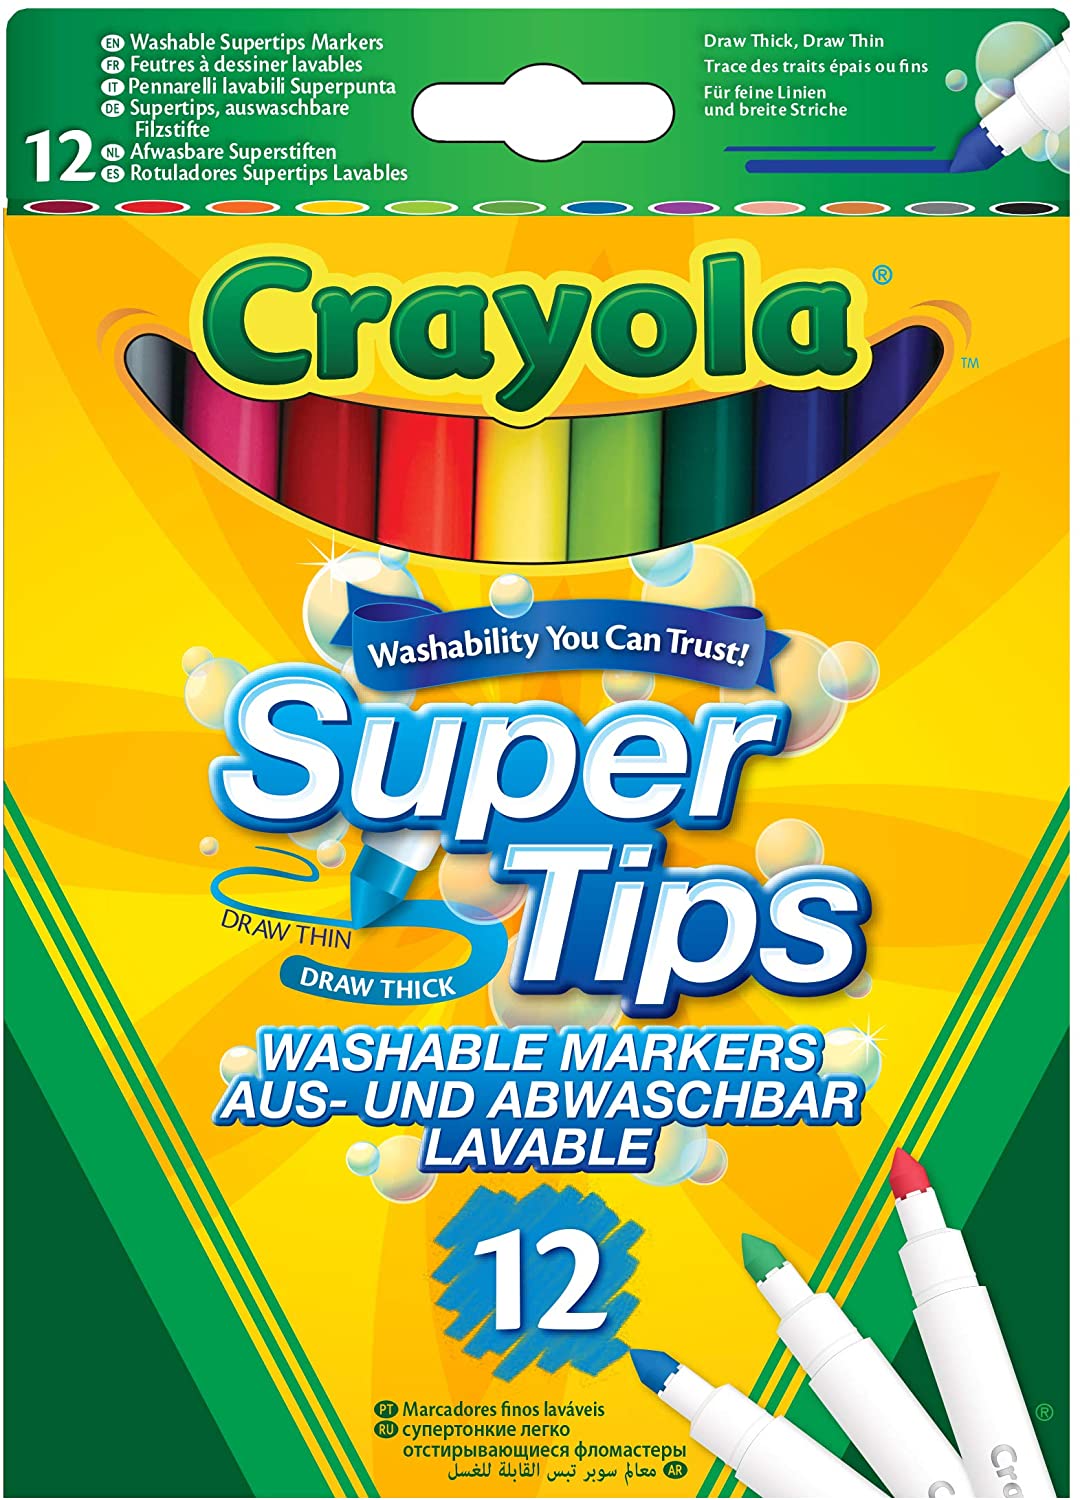 Crayola Supertips waschbar – 12 Stück